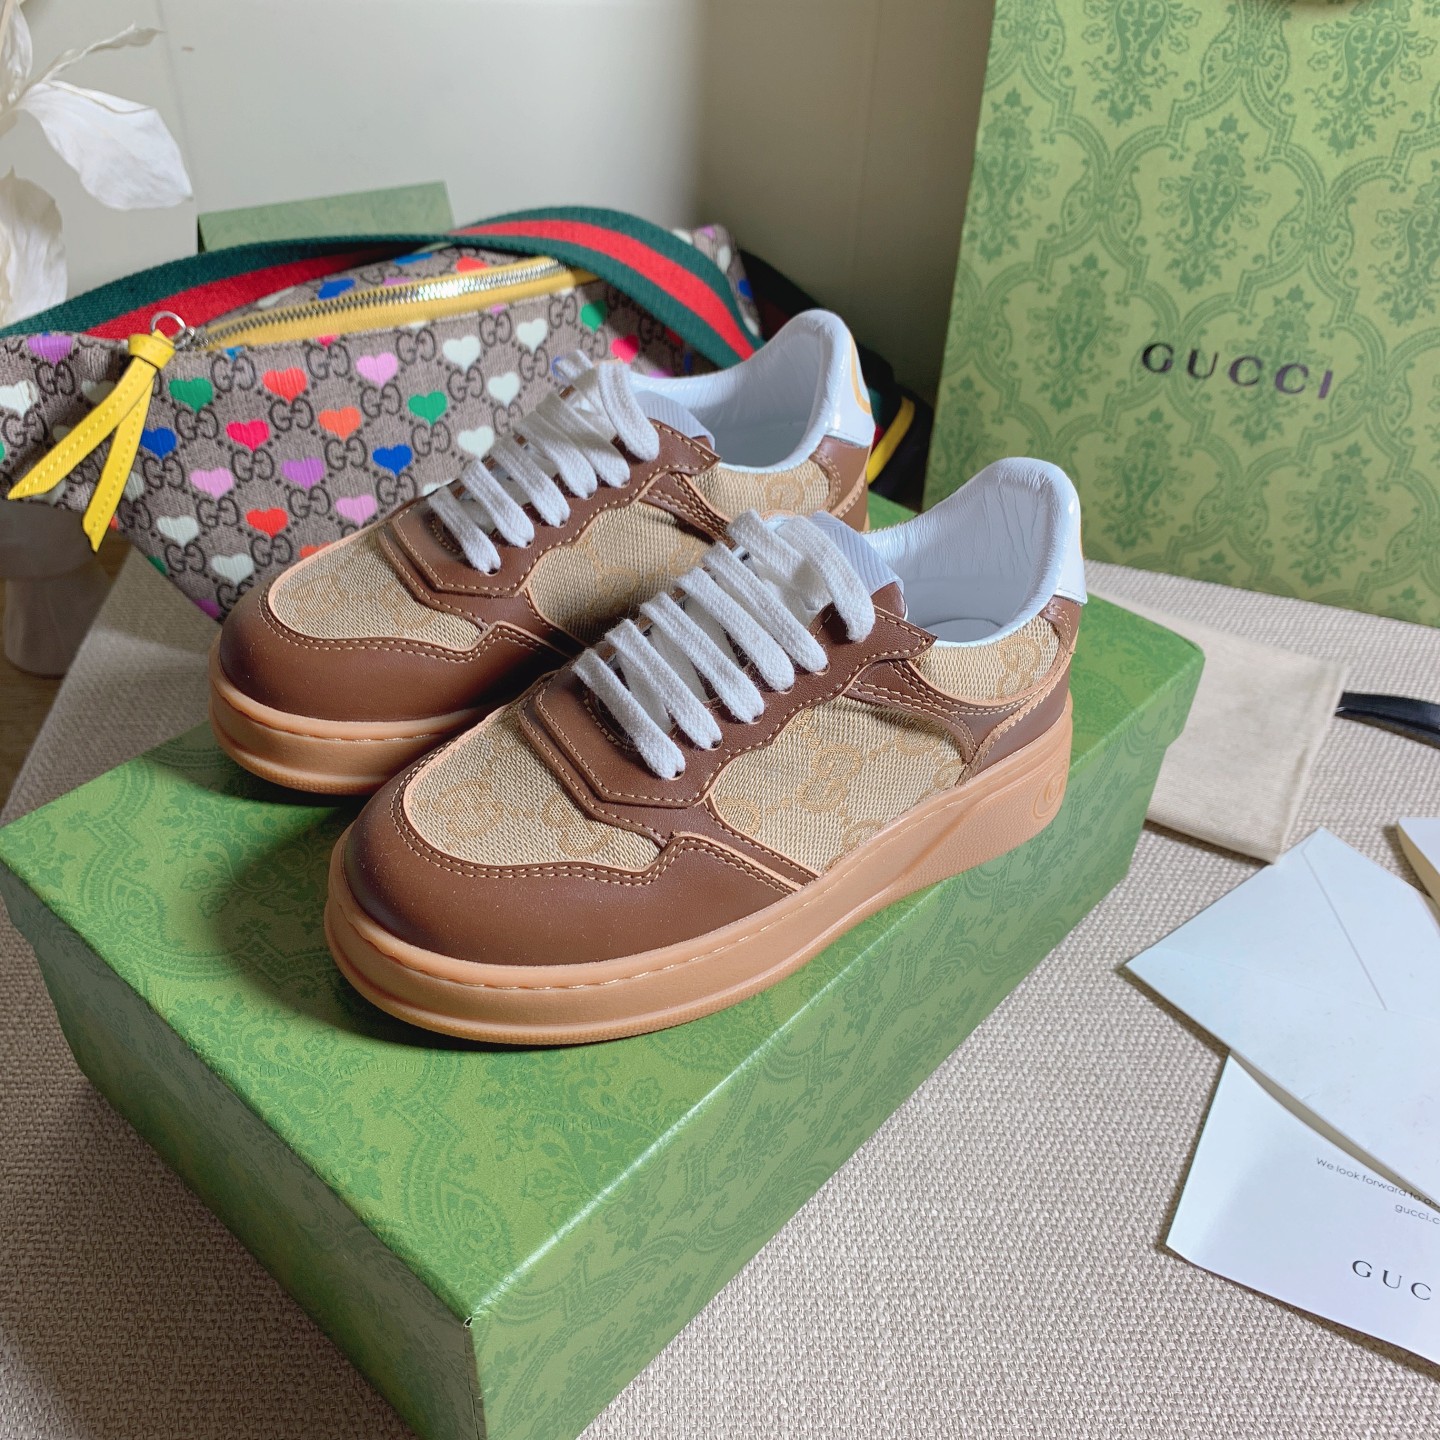 Gucci Chunky B children sneakers